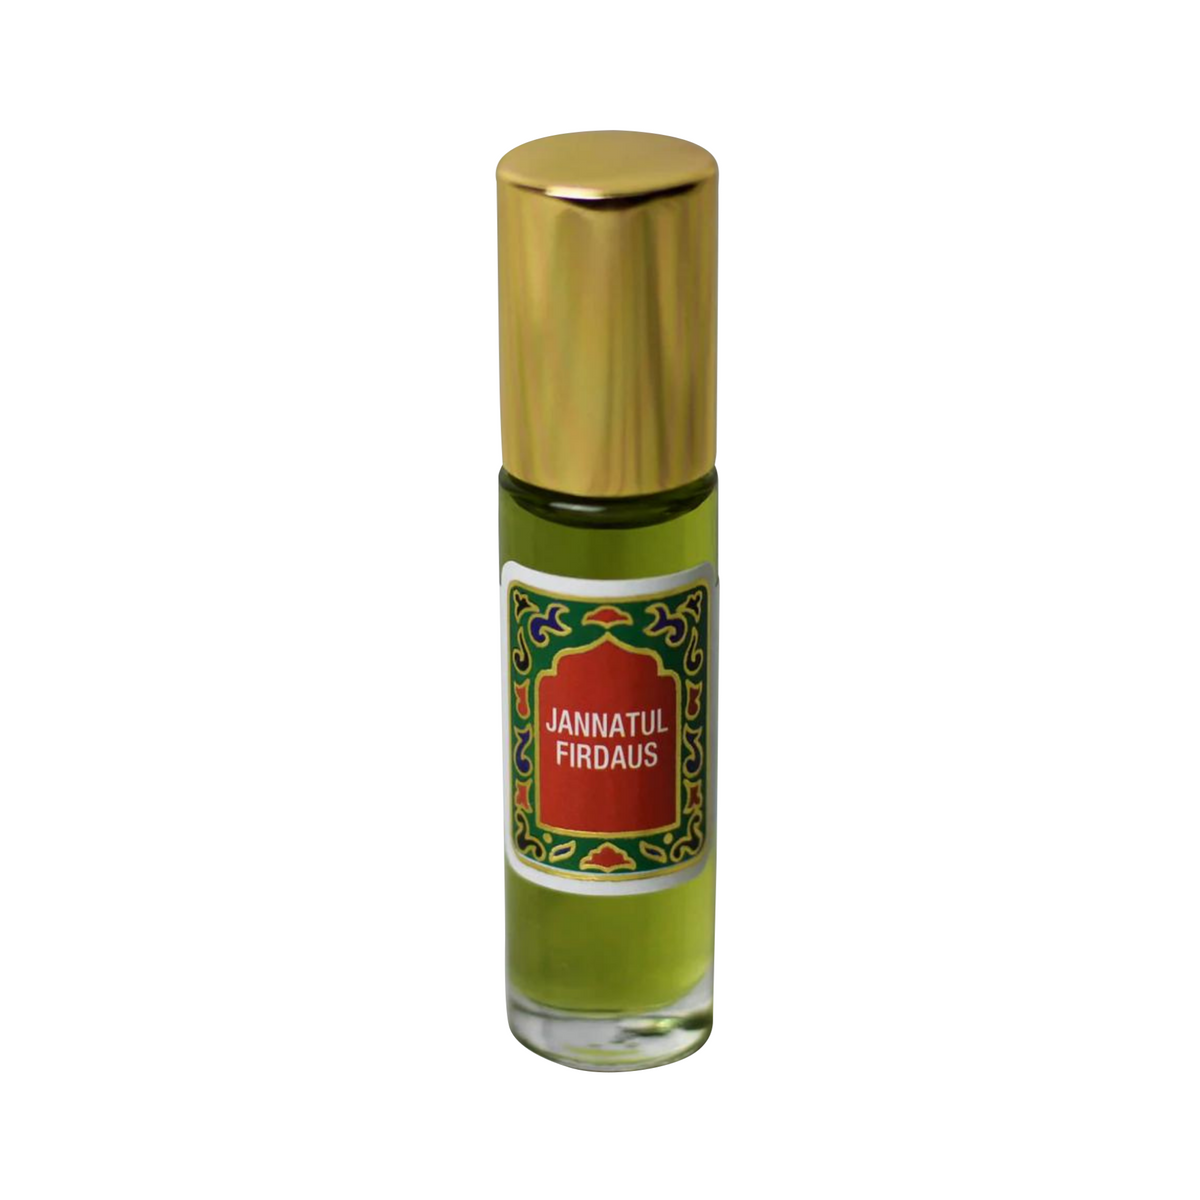 Primary image of Jannatul Firdaus Fragrance Roll-On